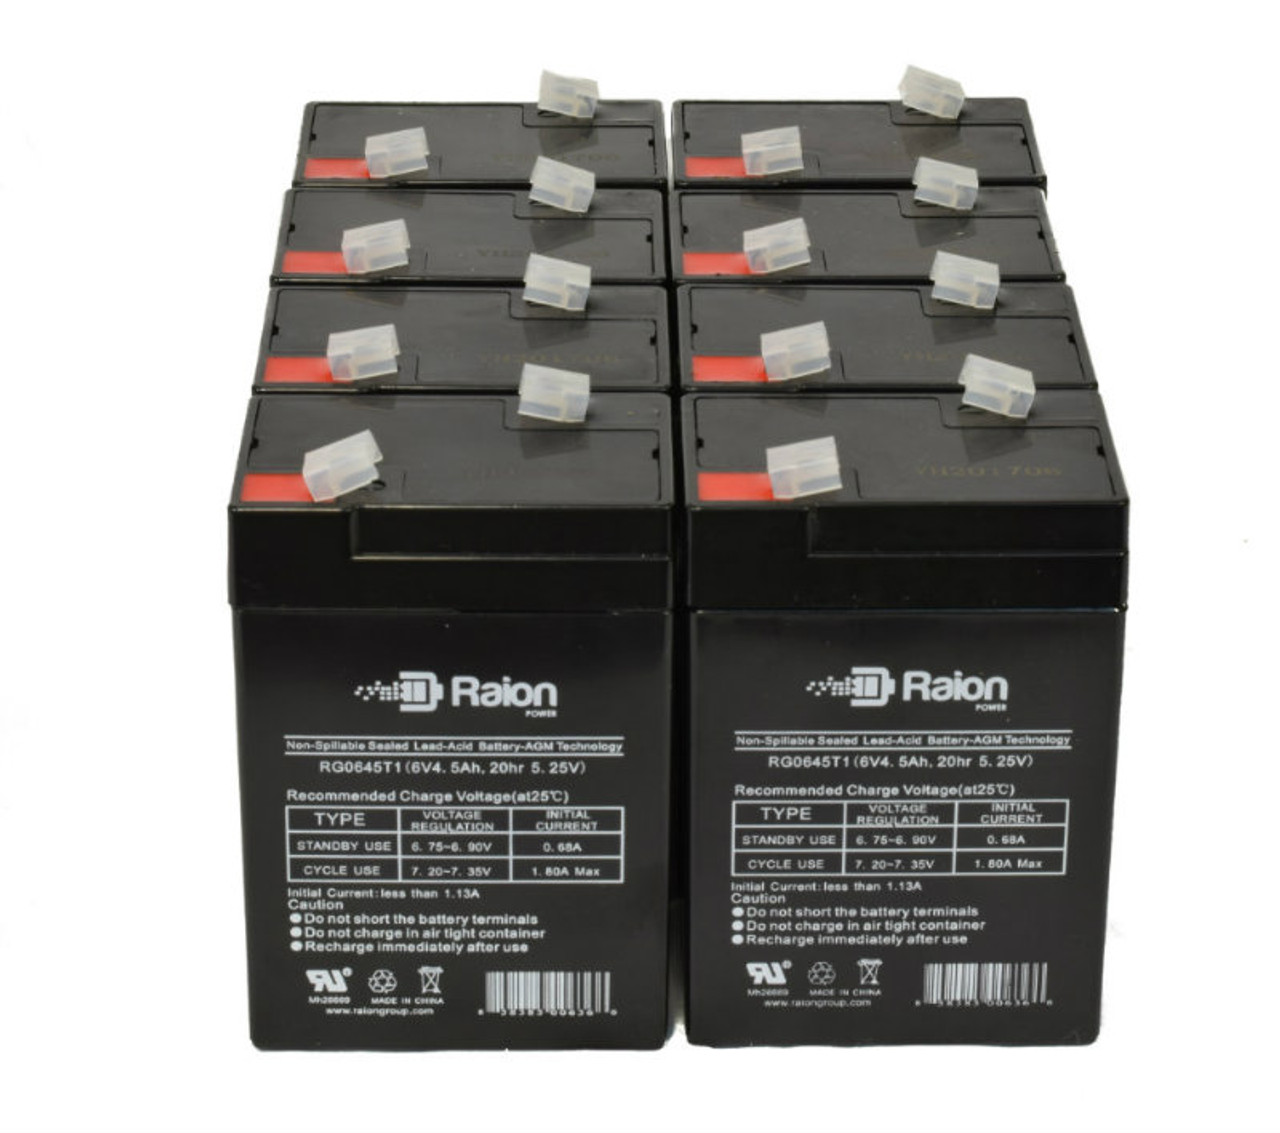 Raion Power 6V 4.5Ah Replacement Emergency Light Battery for Sonnenschein A5064 - 8 Pack